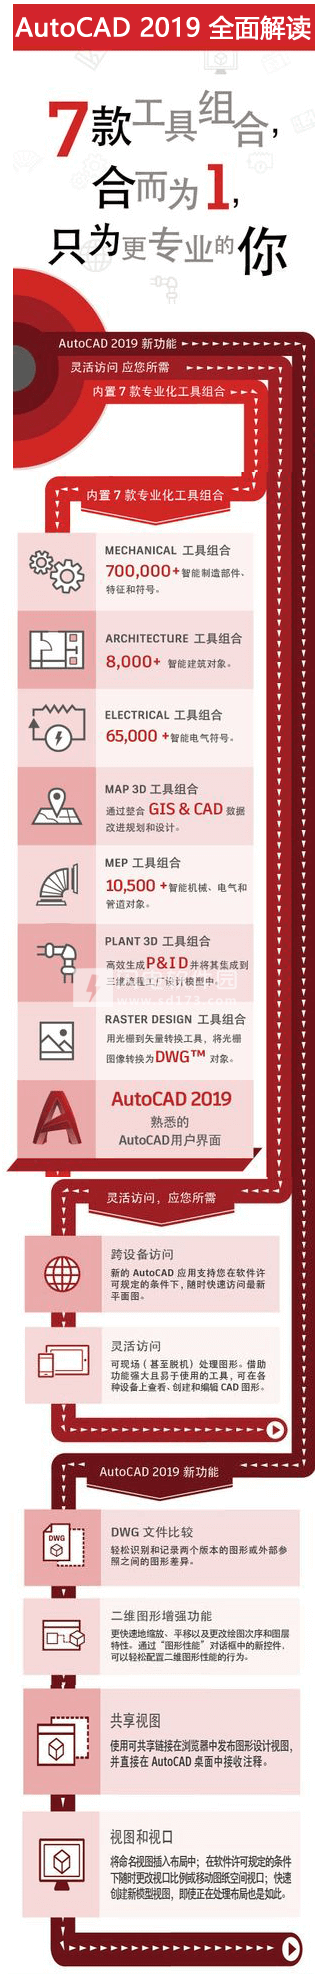 AutoCAD 2019quanmianjiedu